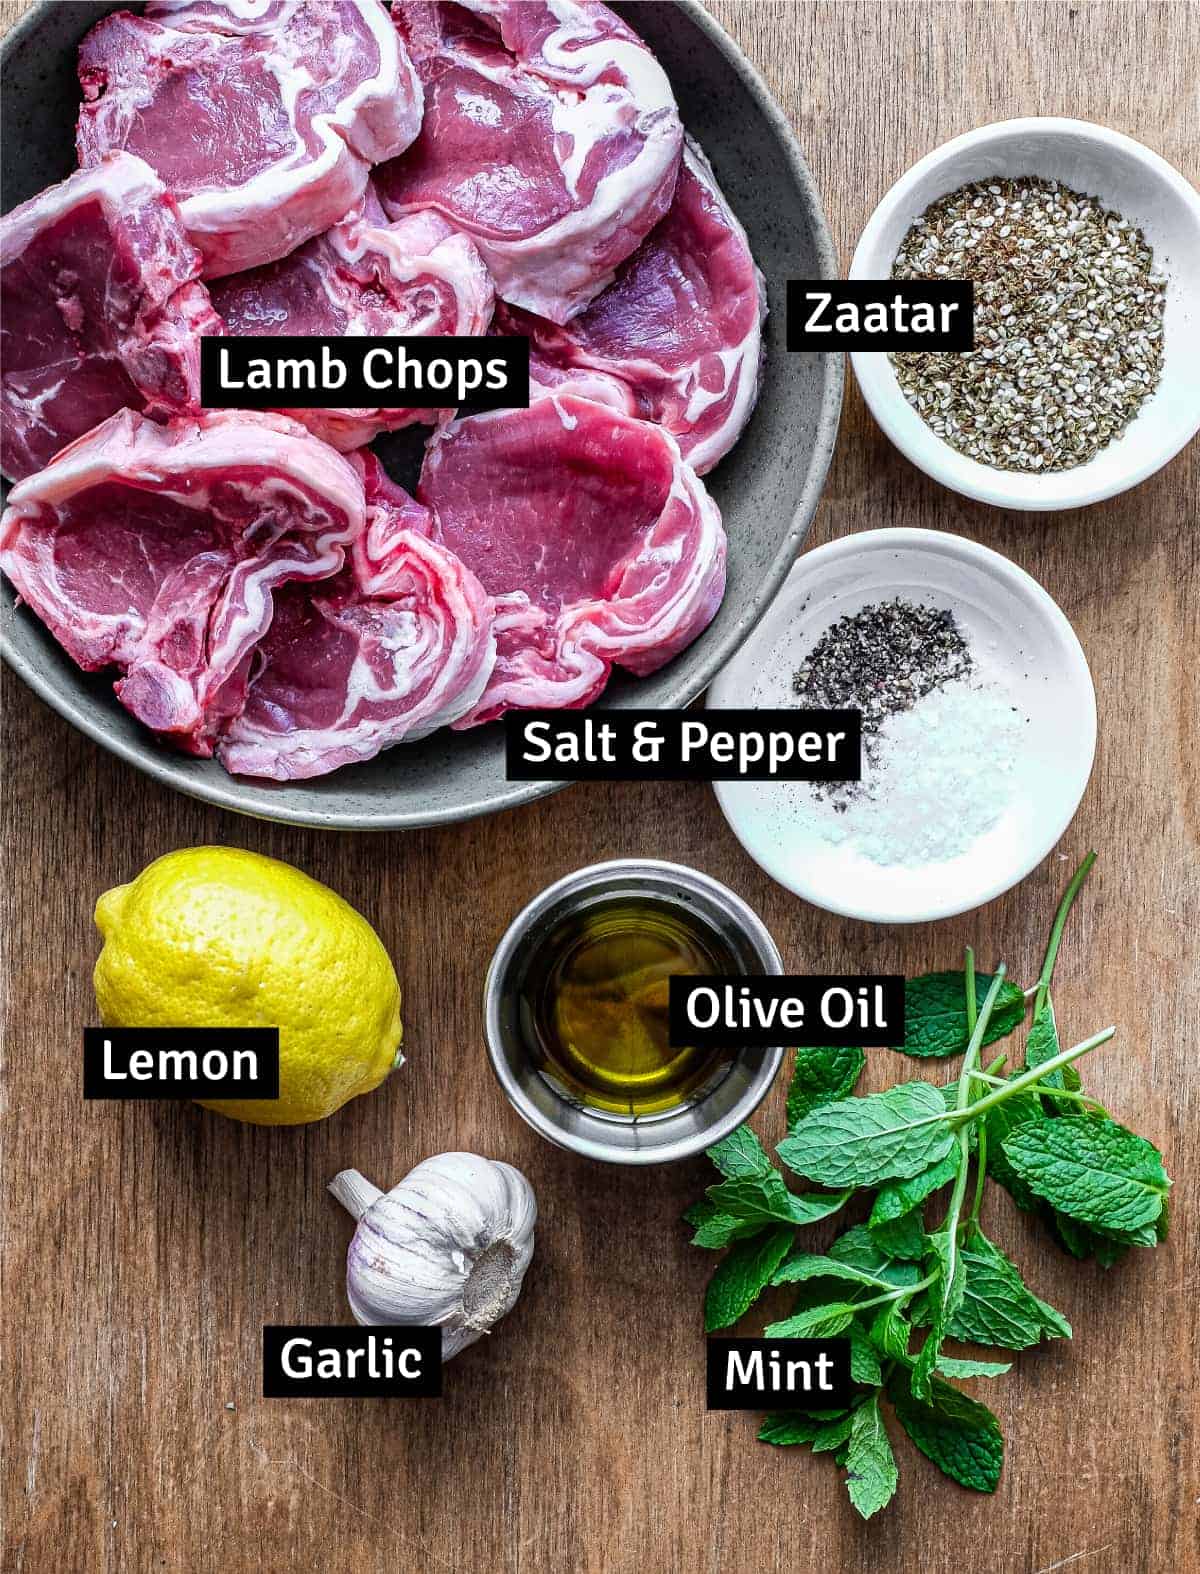 The ingredients for Zaatar Lamb: lamb, zaatar, salt & pepper, lemon, olive oil, garlic and fresh mint.